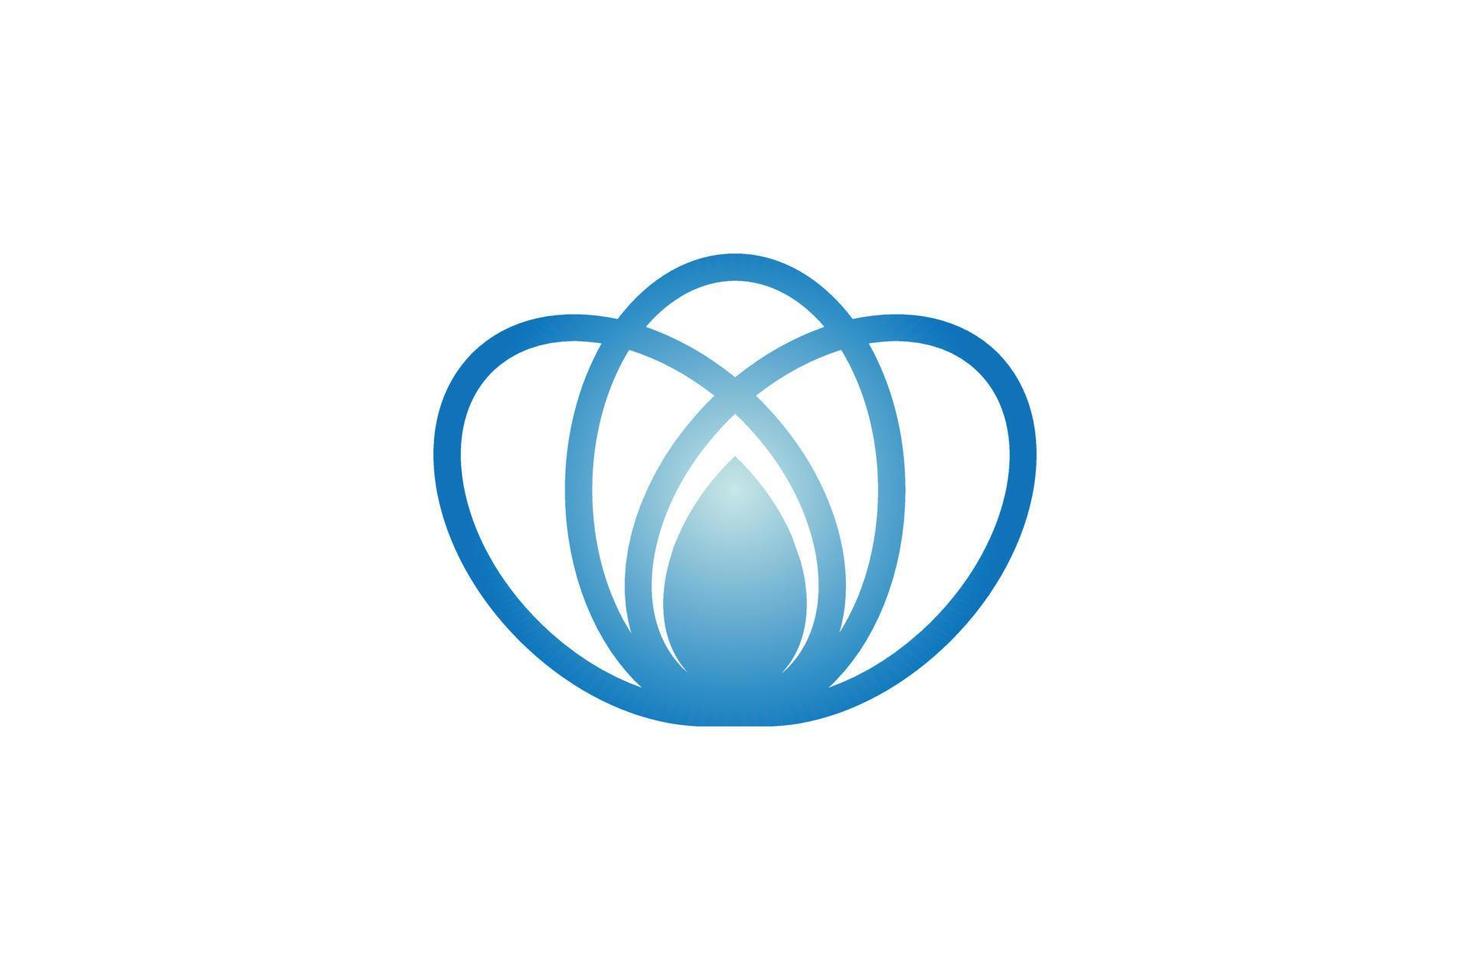 Blue Water Flower logo Design vector